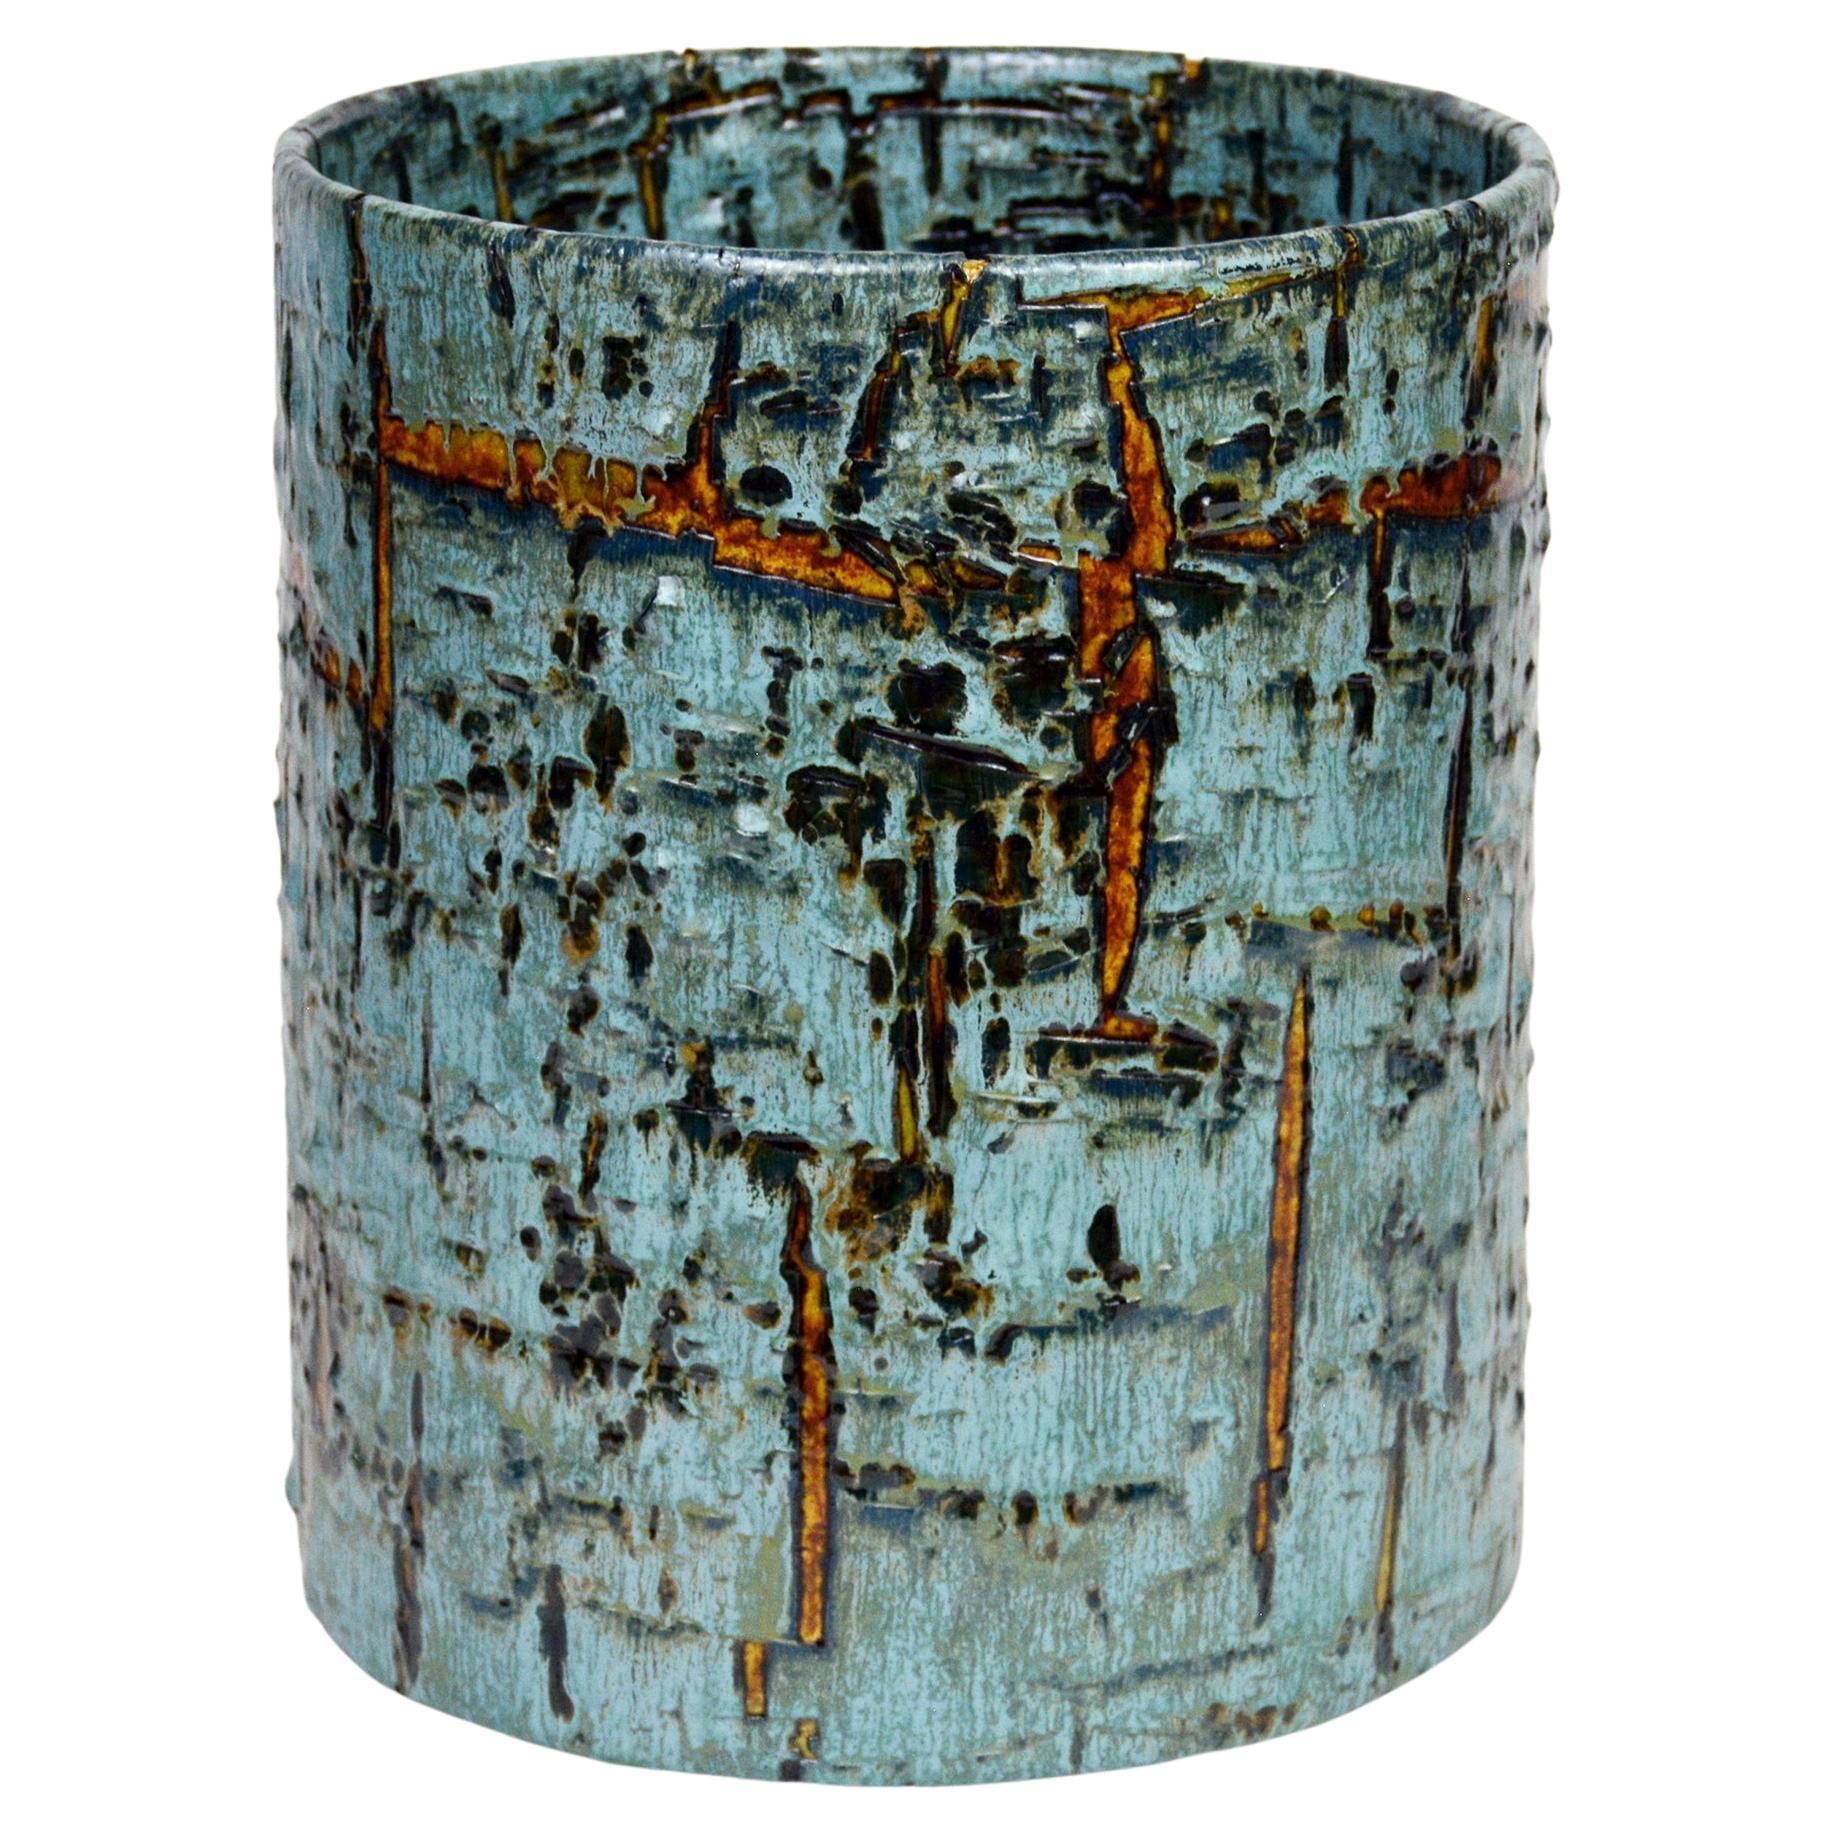 Ceramic Vessel by William Edwards  Cylinder Sculpture 